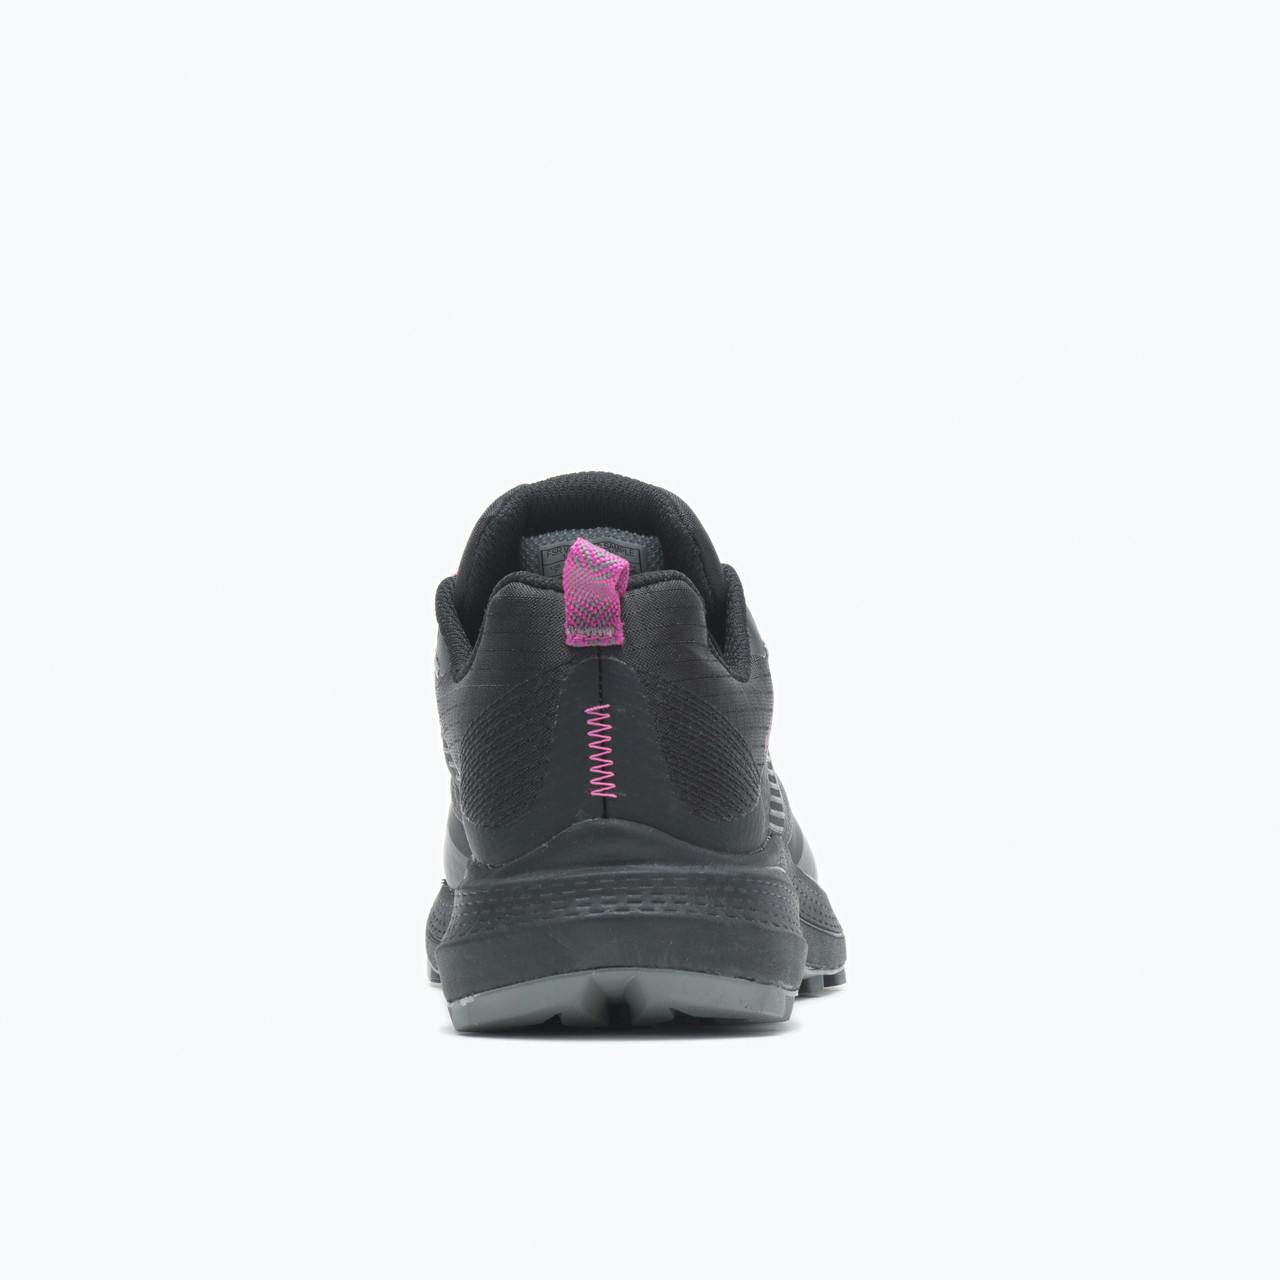 MQM 3 Gore-Tex Light Trail Shoes Black/Fuchsia